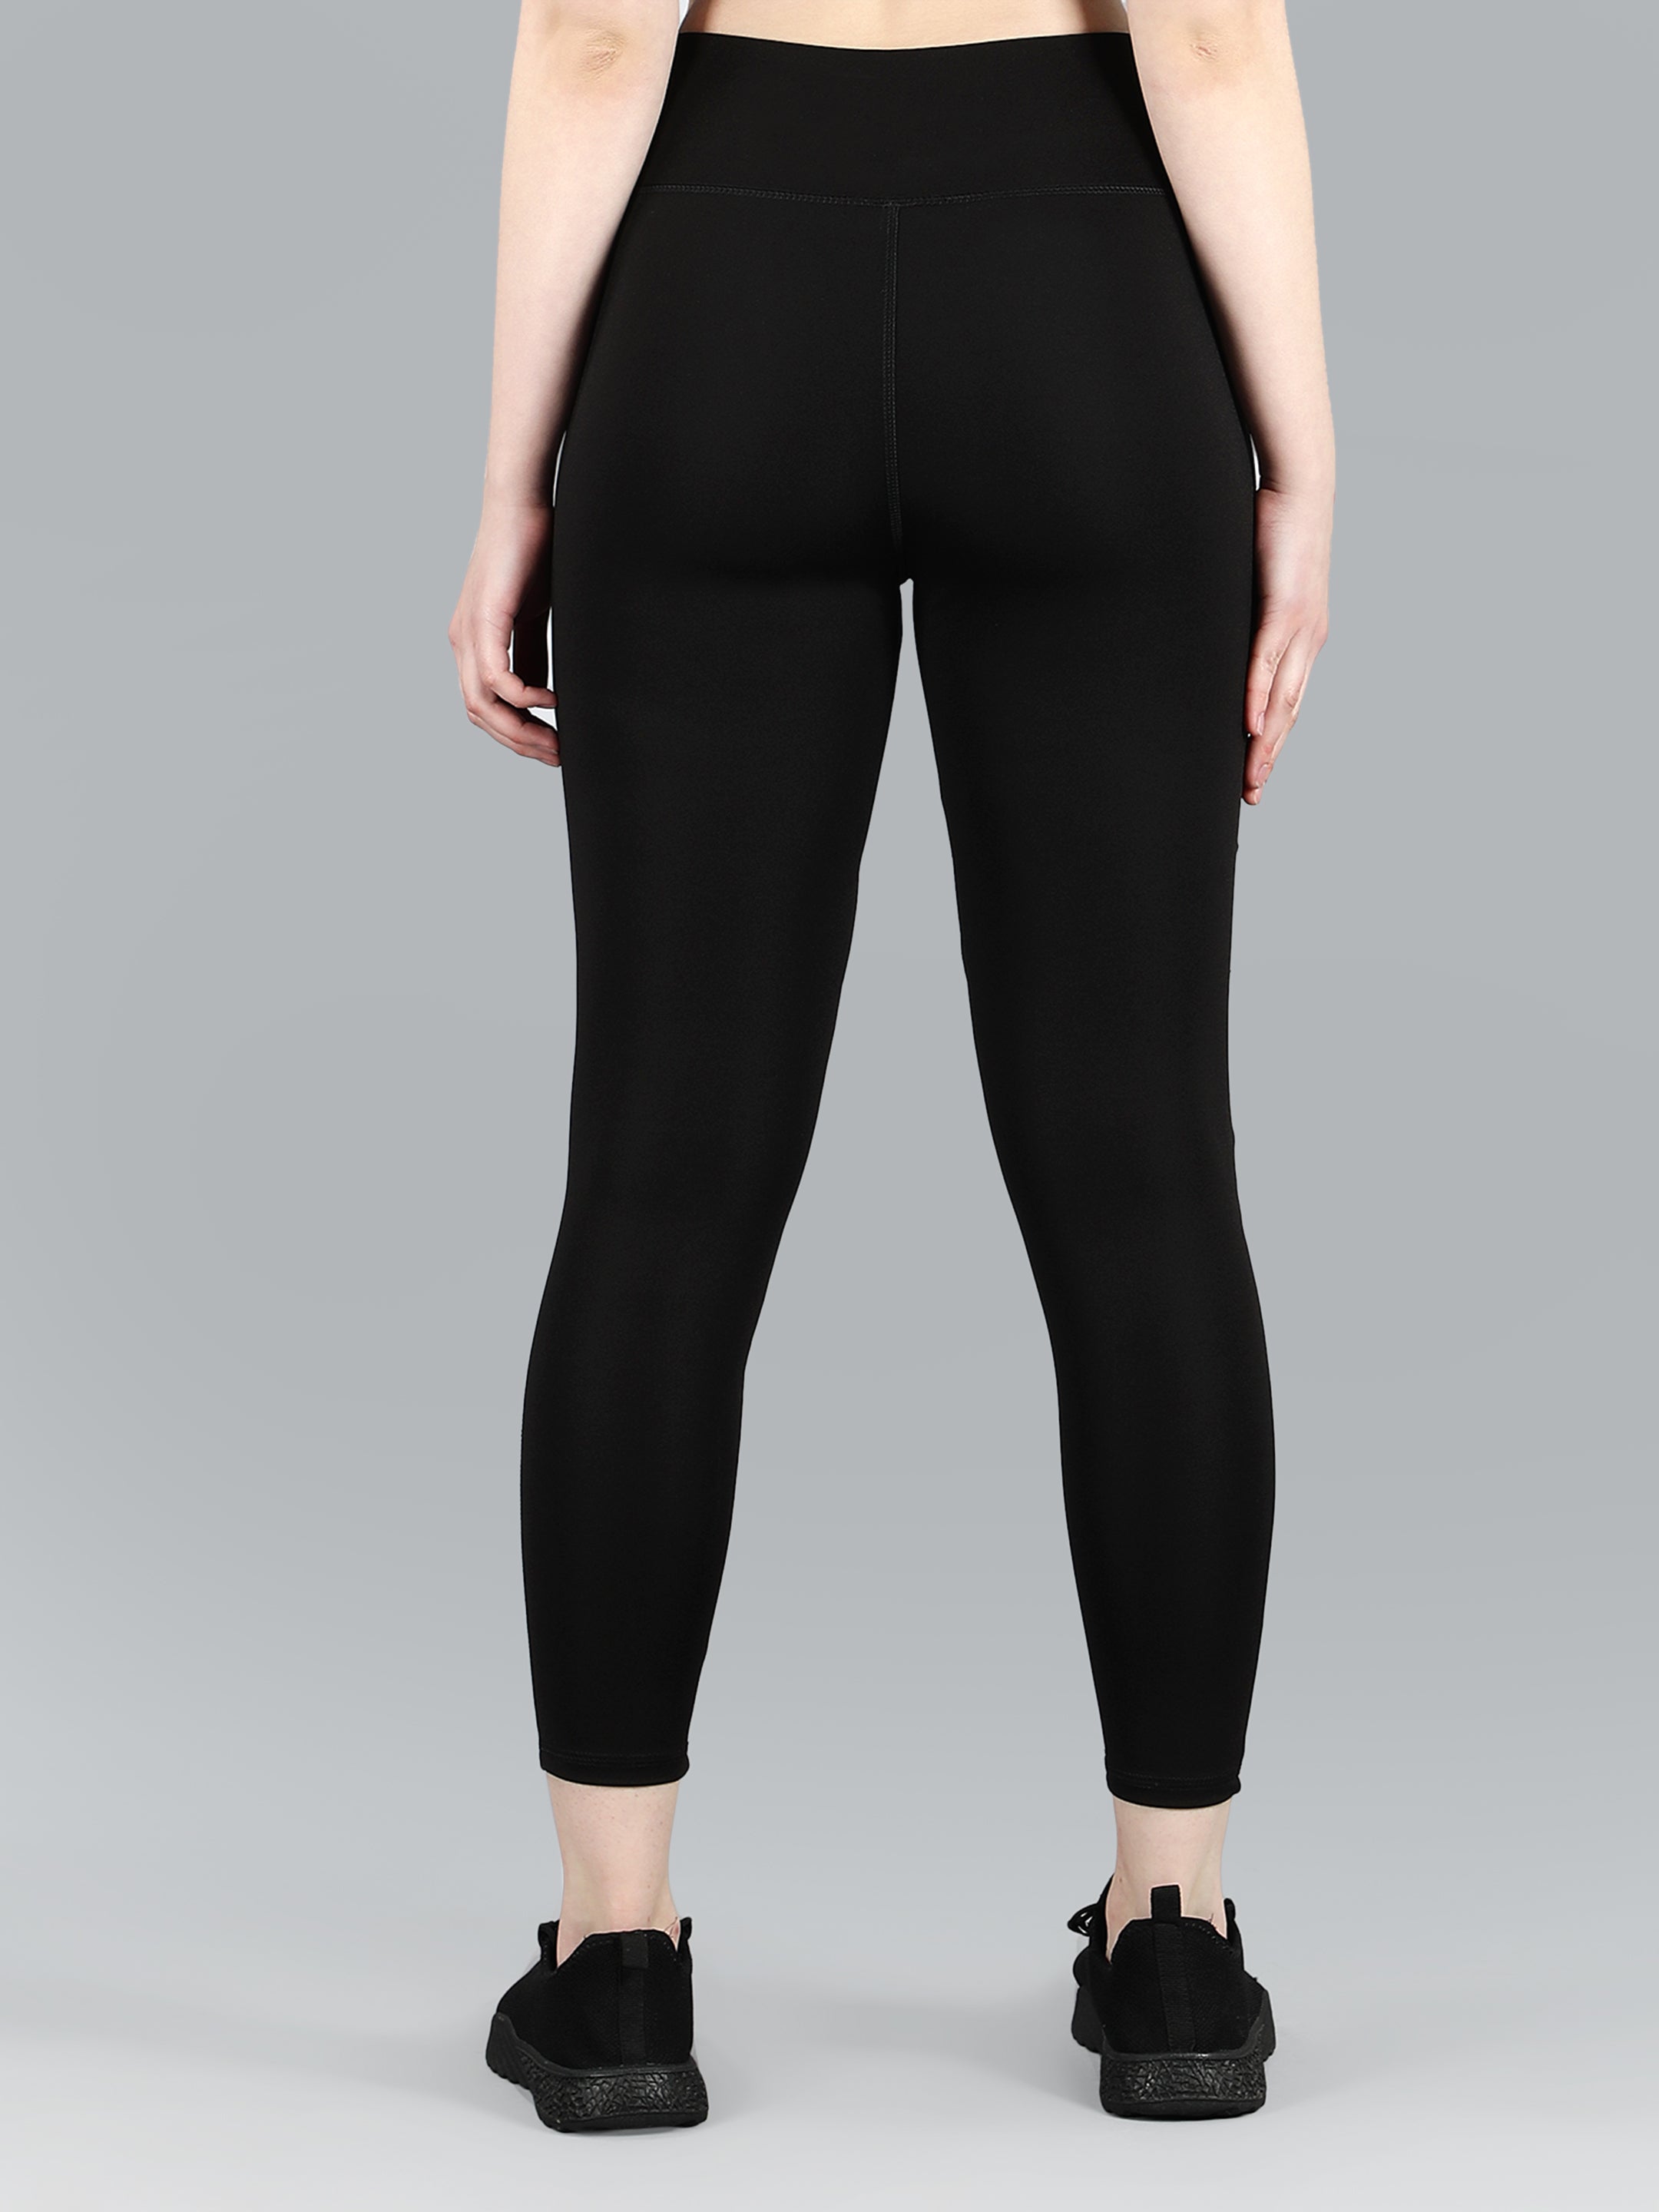 YOGA Pants for Women | Ladies Activewear leggings | Tummy Control | Wear  Sierra